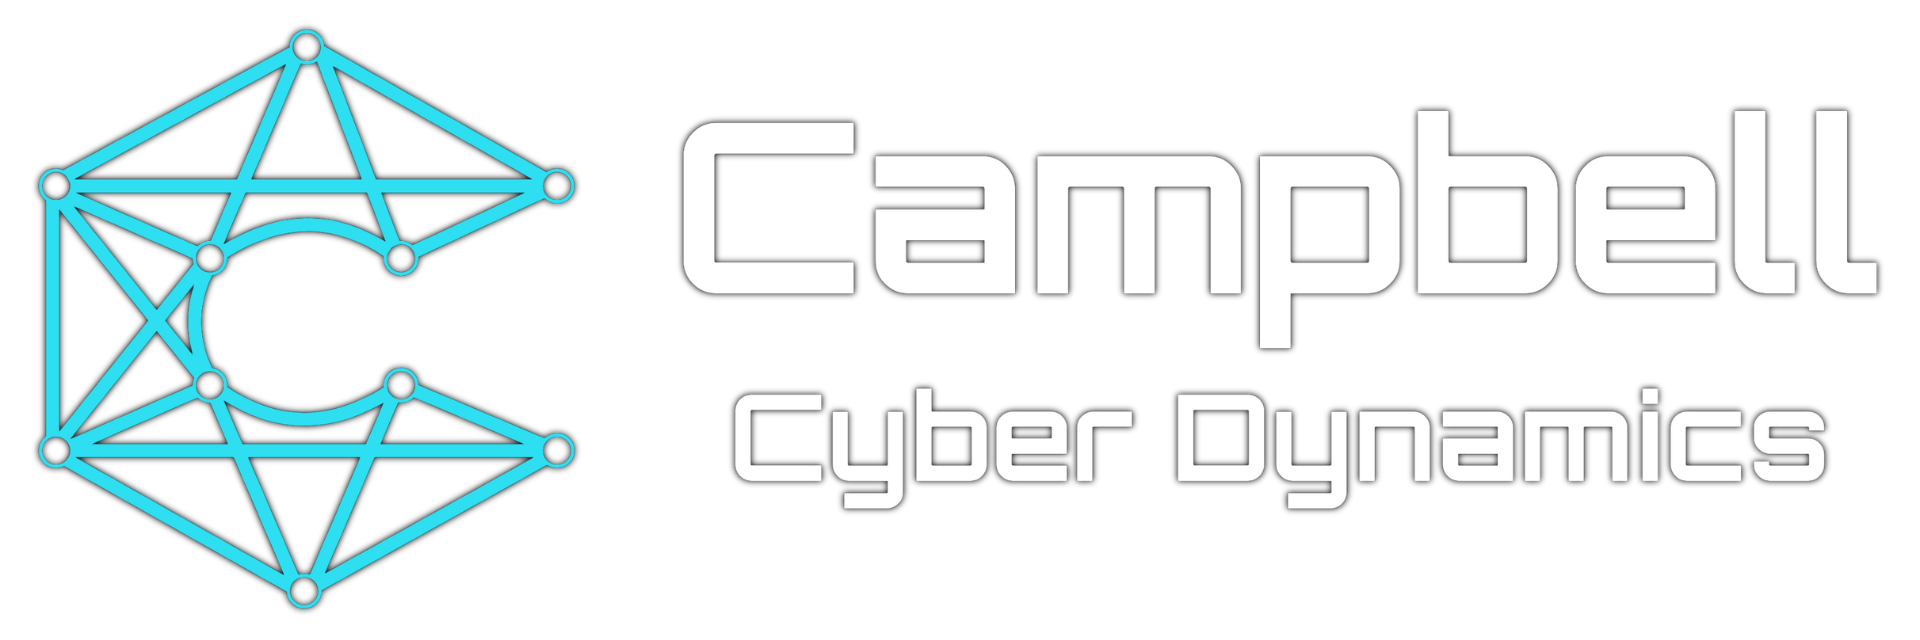 Cyber Dynamics Logo